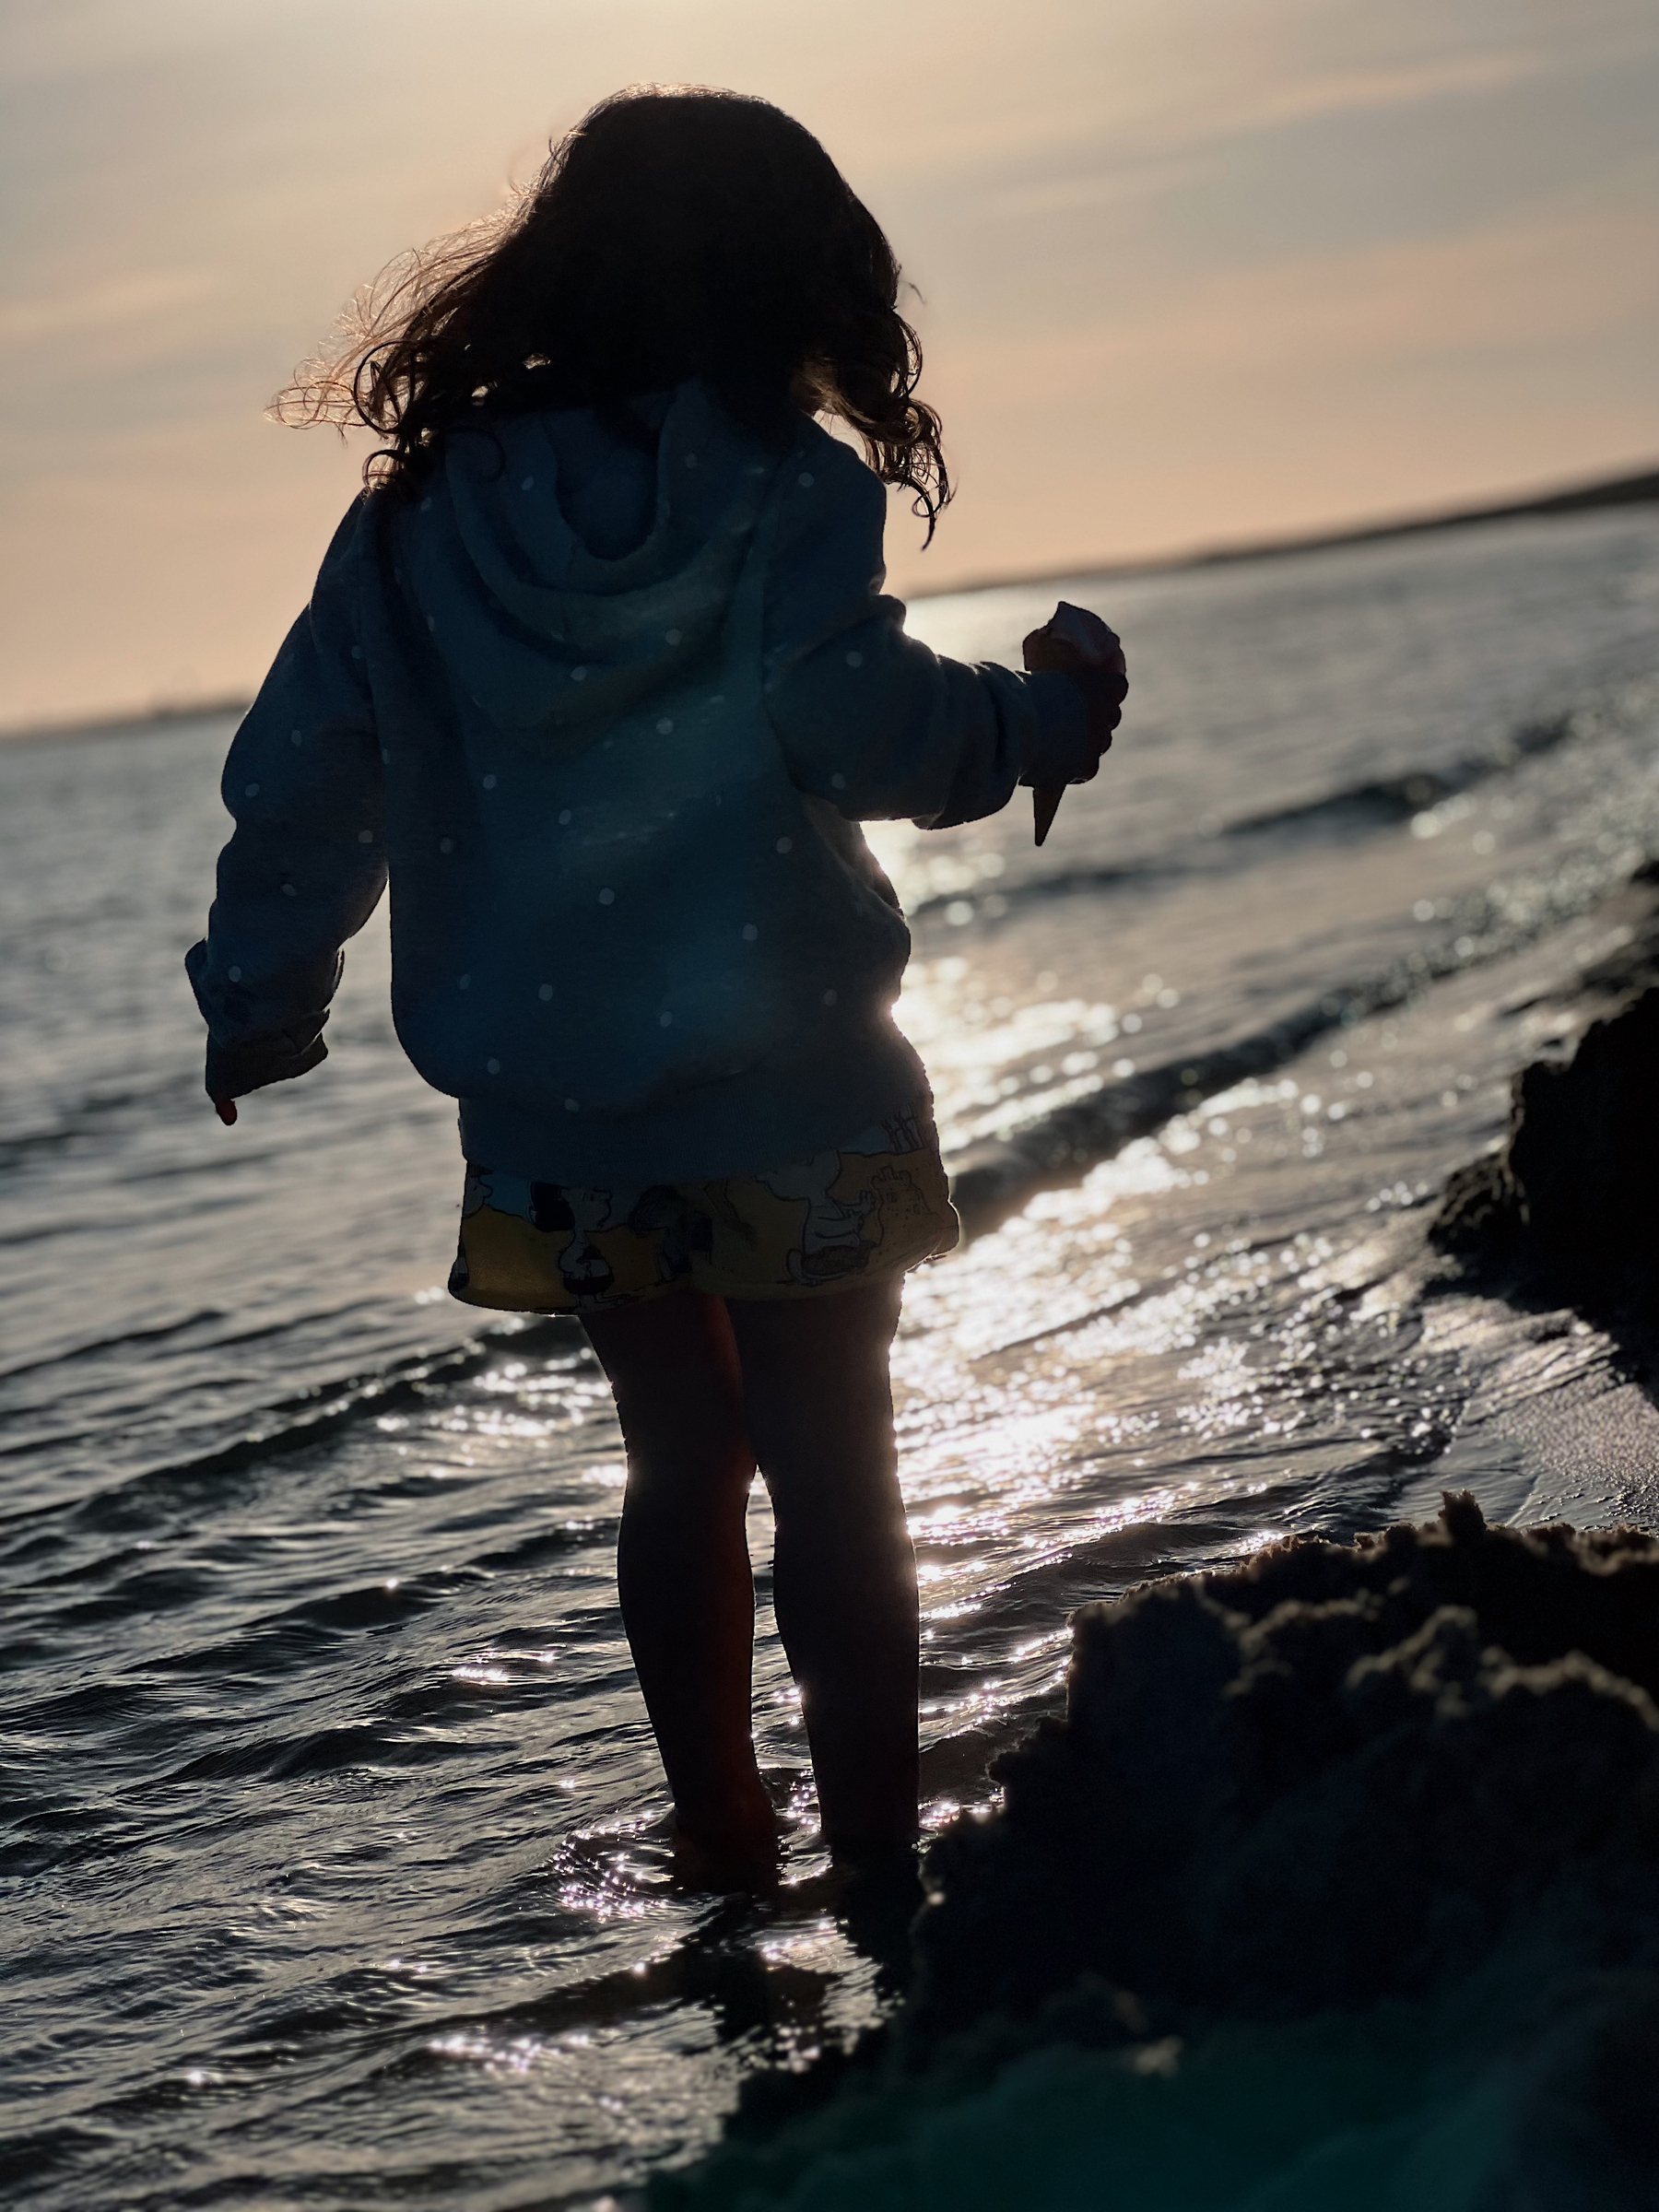 A girl walks along the shore, ice cream in hand. 